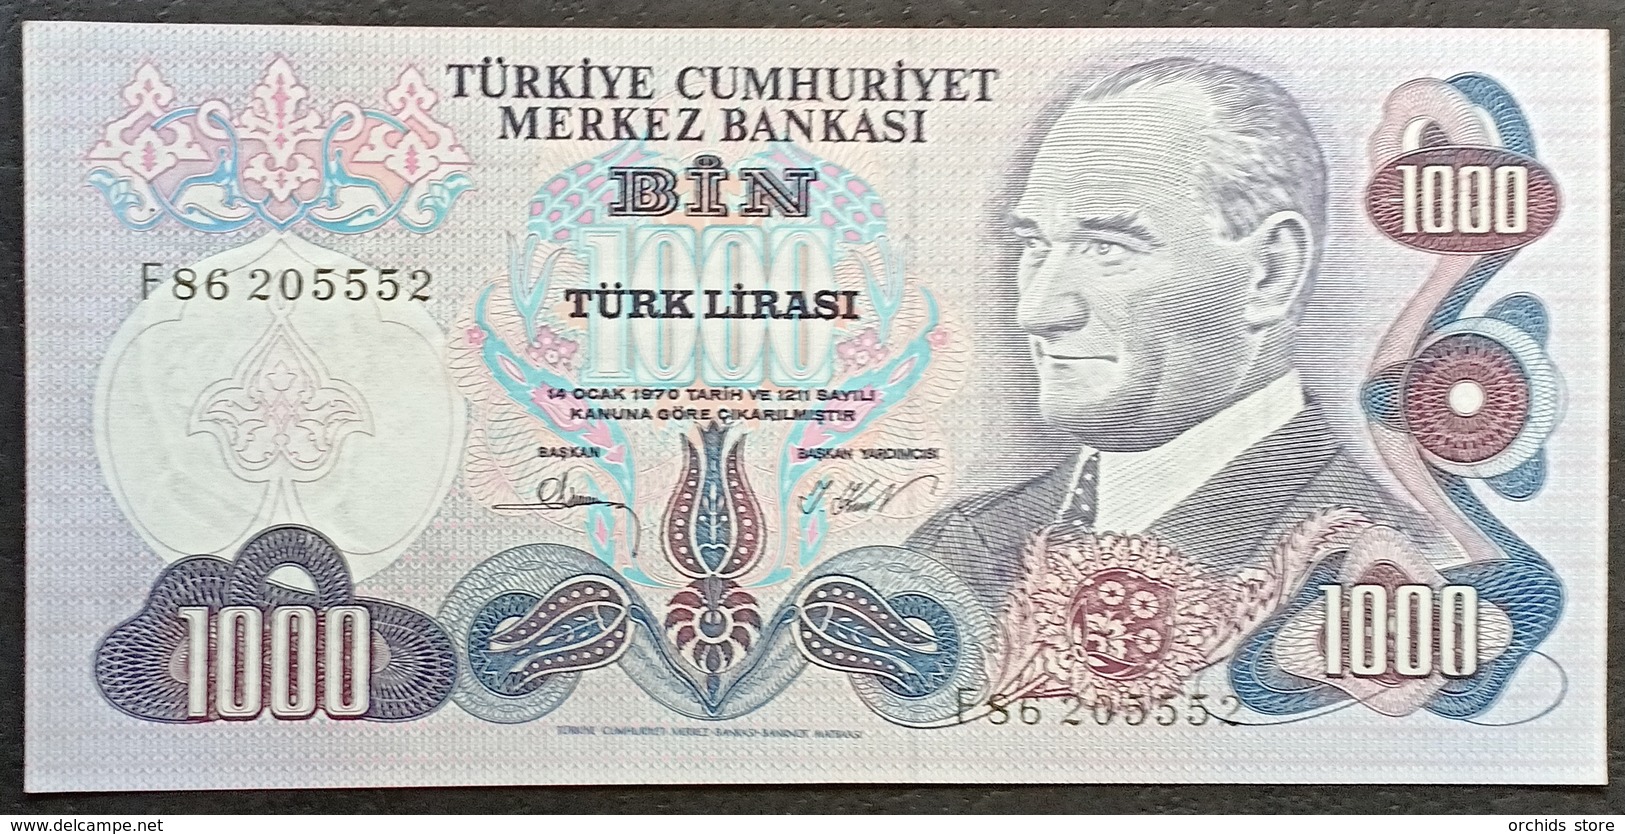 FF - Turkey Banknote 1970 1000 LIRAS P-191 F86 205552 UNC - Turchia